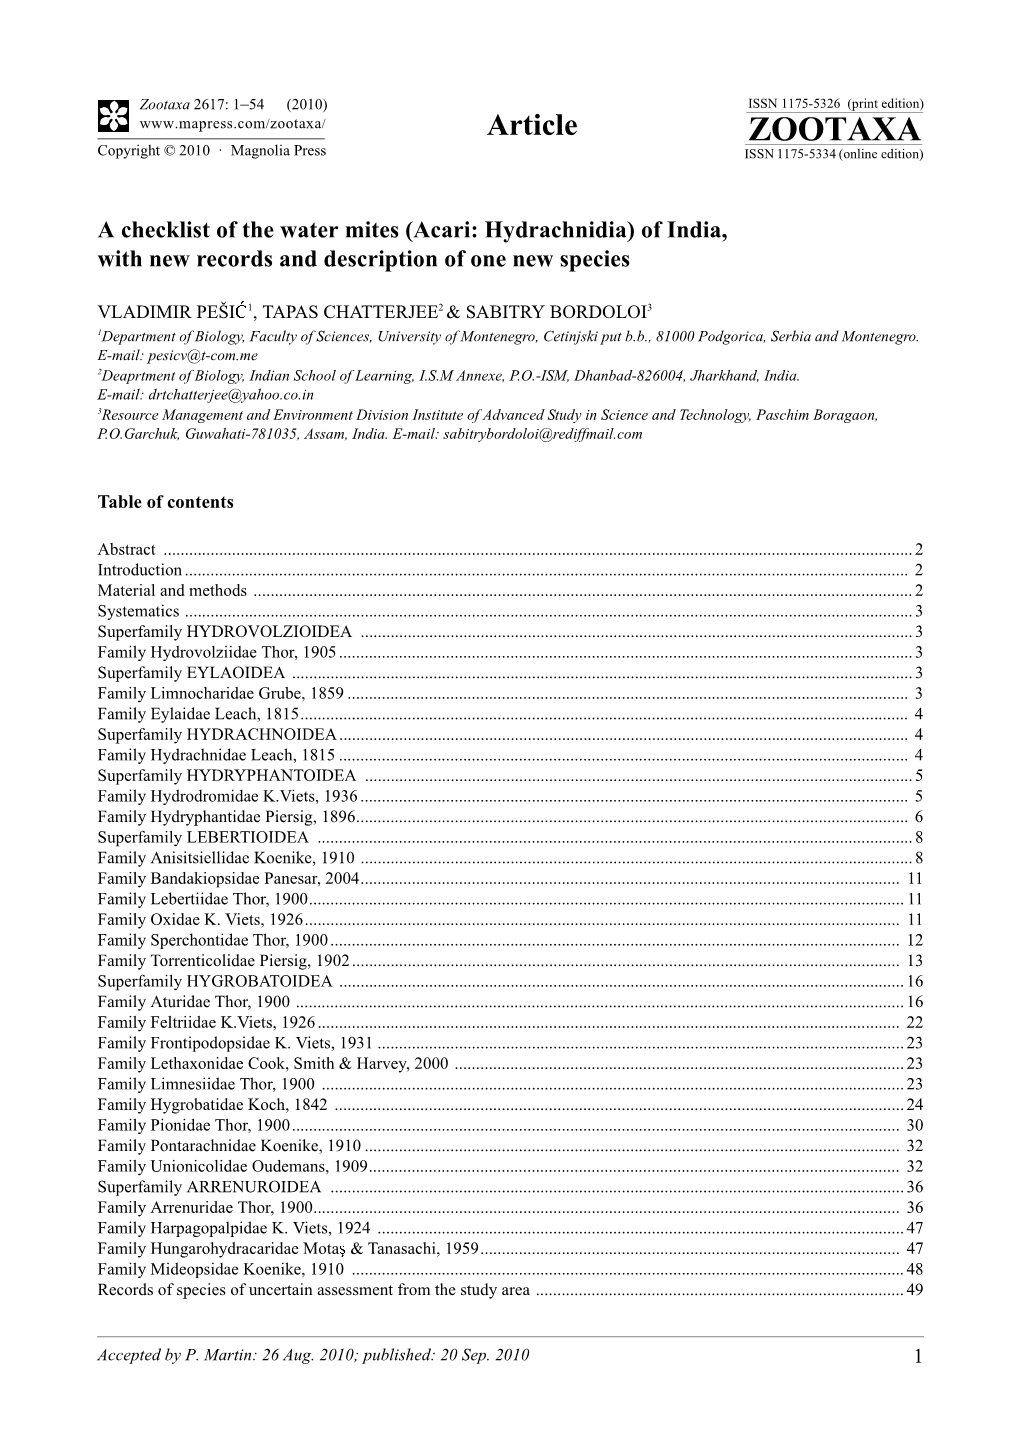 Zootaxa, a Checklist of the Water Mites (Acari: Hydrachnidia)